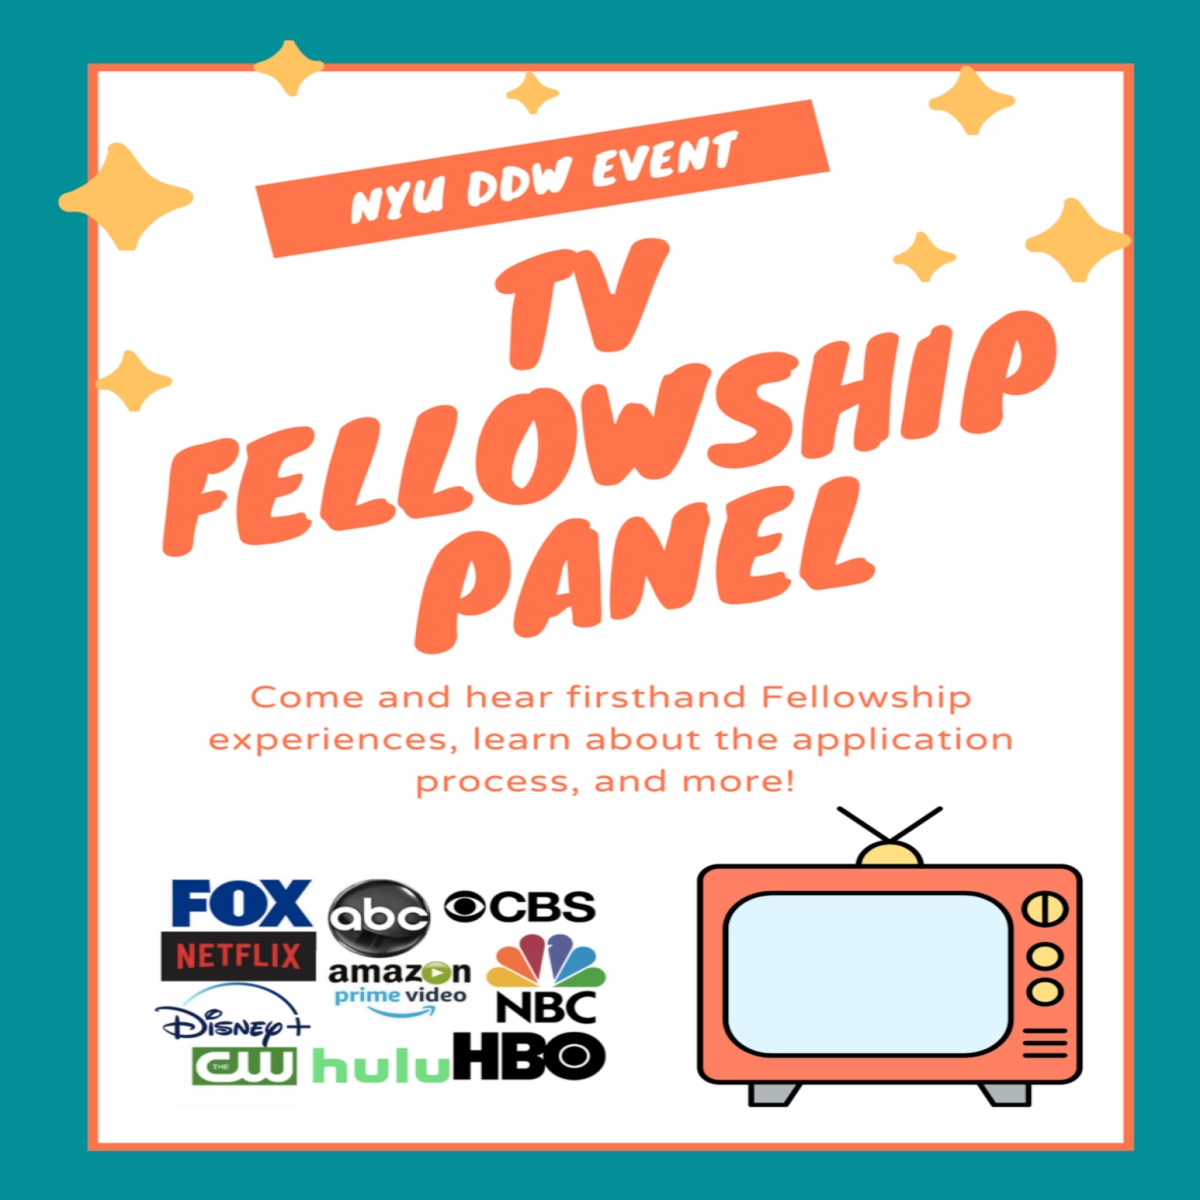 DDW TV Fellowship Panel